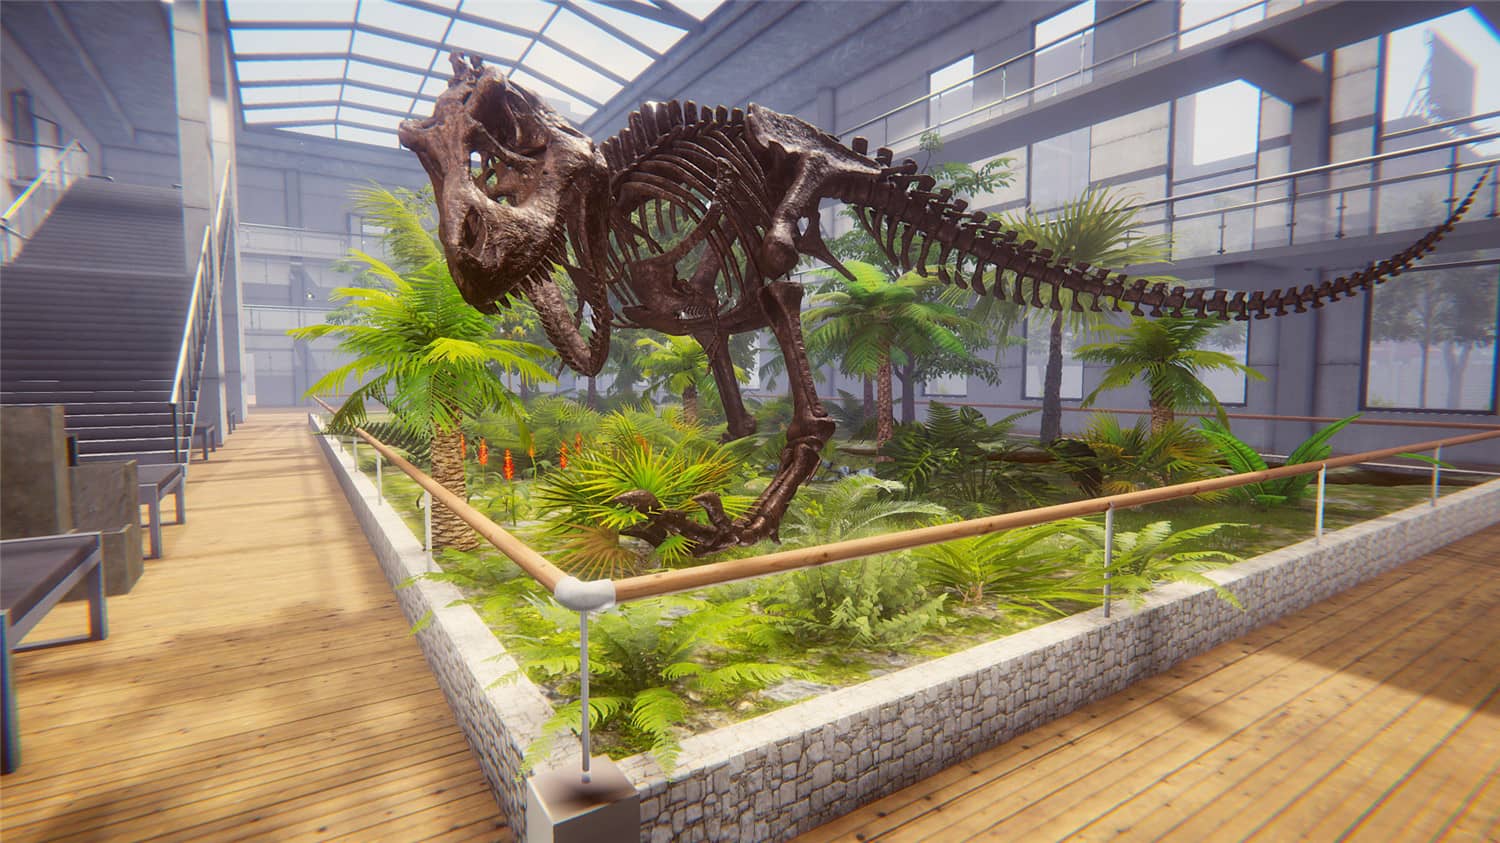 恐龙化石猎人 古生物学家模拟器/Dinosaur Fossil Hunter-1